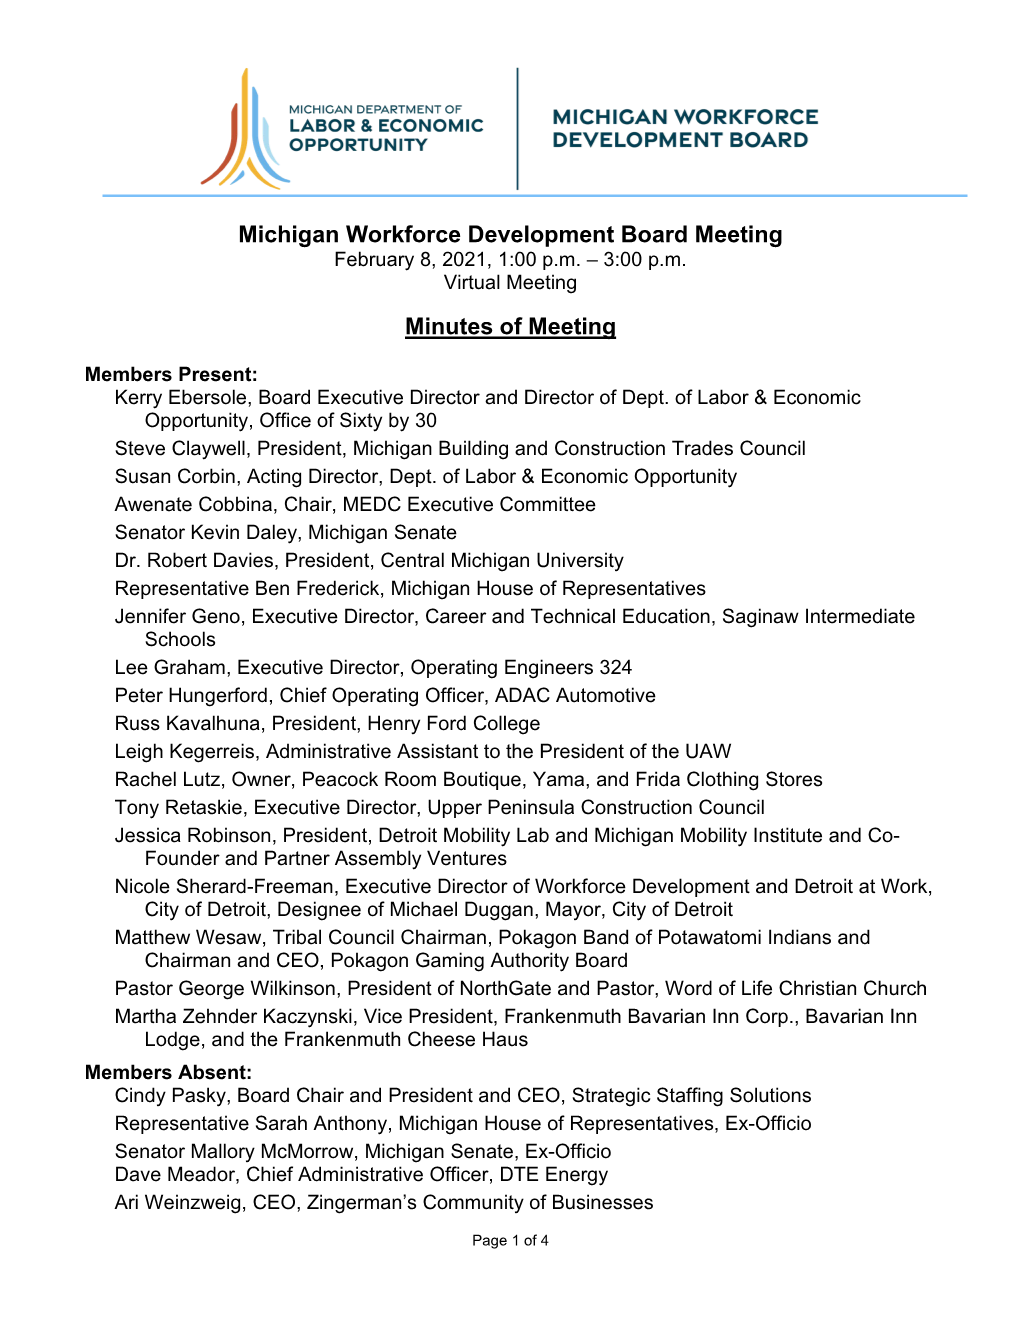 Michigan Workforce Development Board Meeting Minutes of Meeting